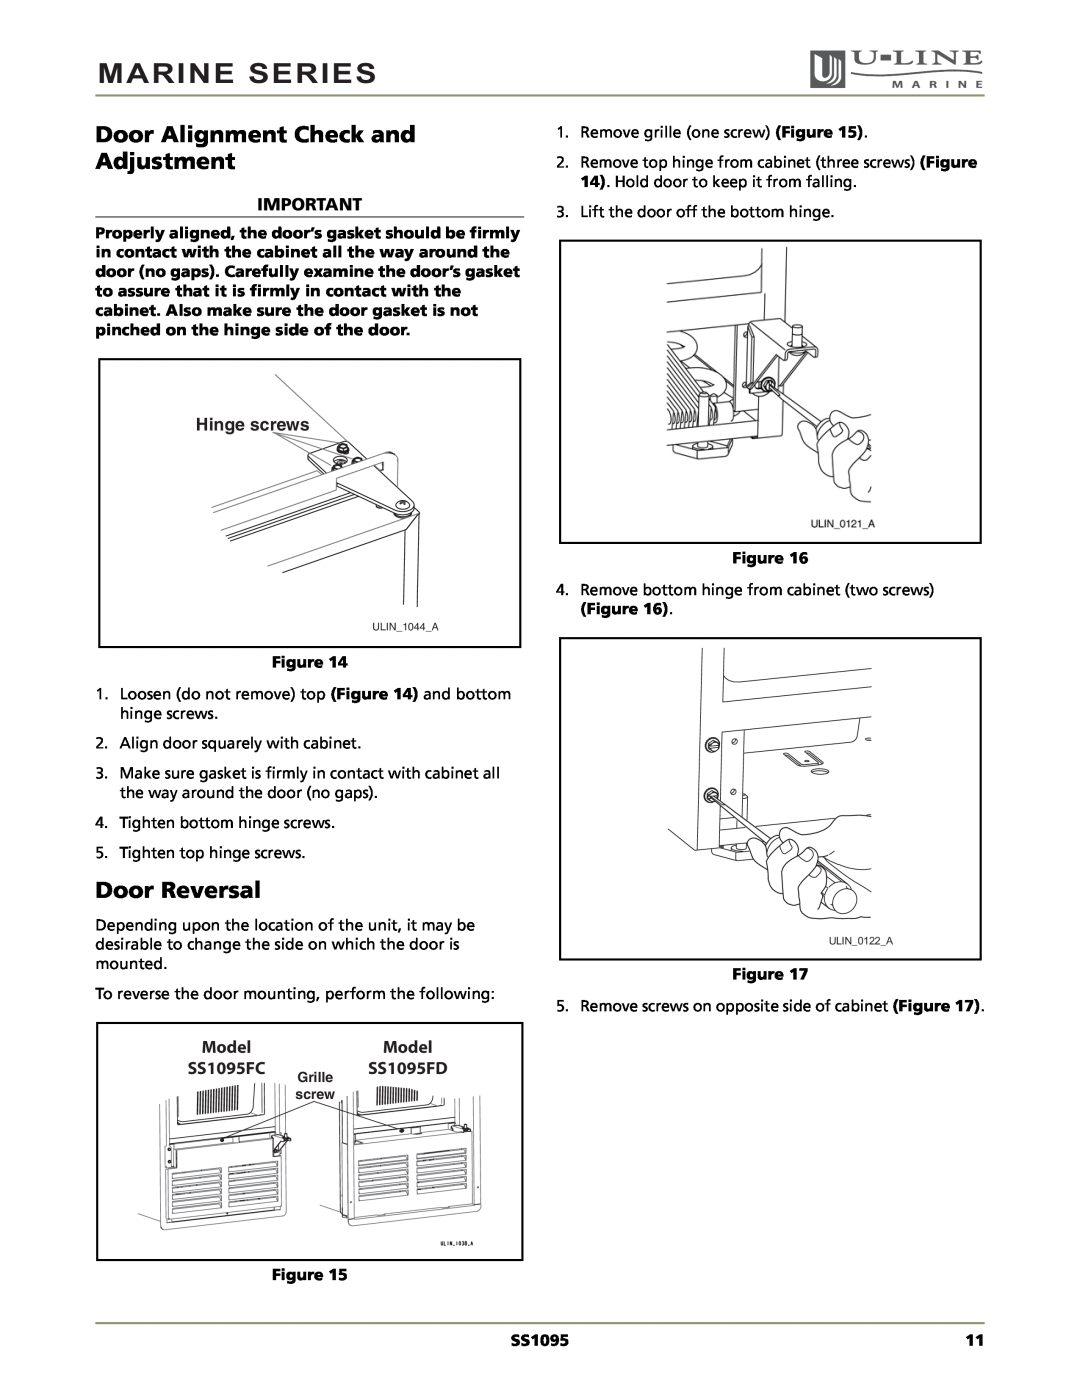 U-Line manual Door Alignment Check and Adjustment, Door Reversal, Marine Series, Hinge screws, Model, SS1095FC, SS1095FD 